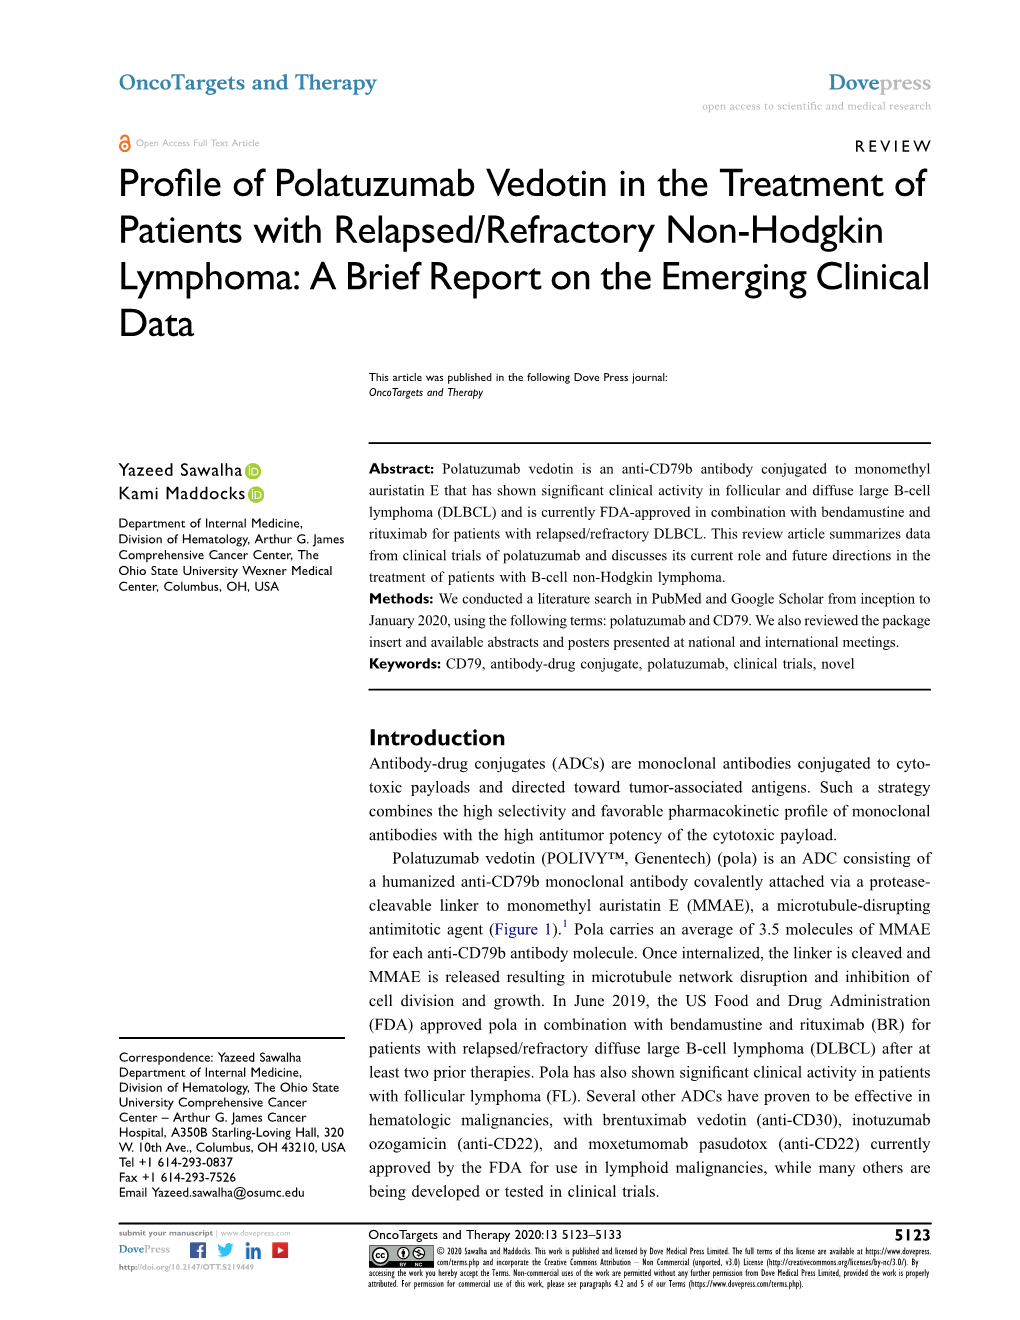 Profile of Polatuzumab Vedotin in the Treatment